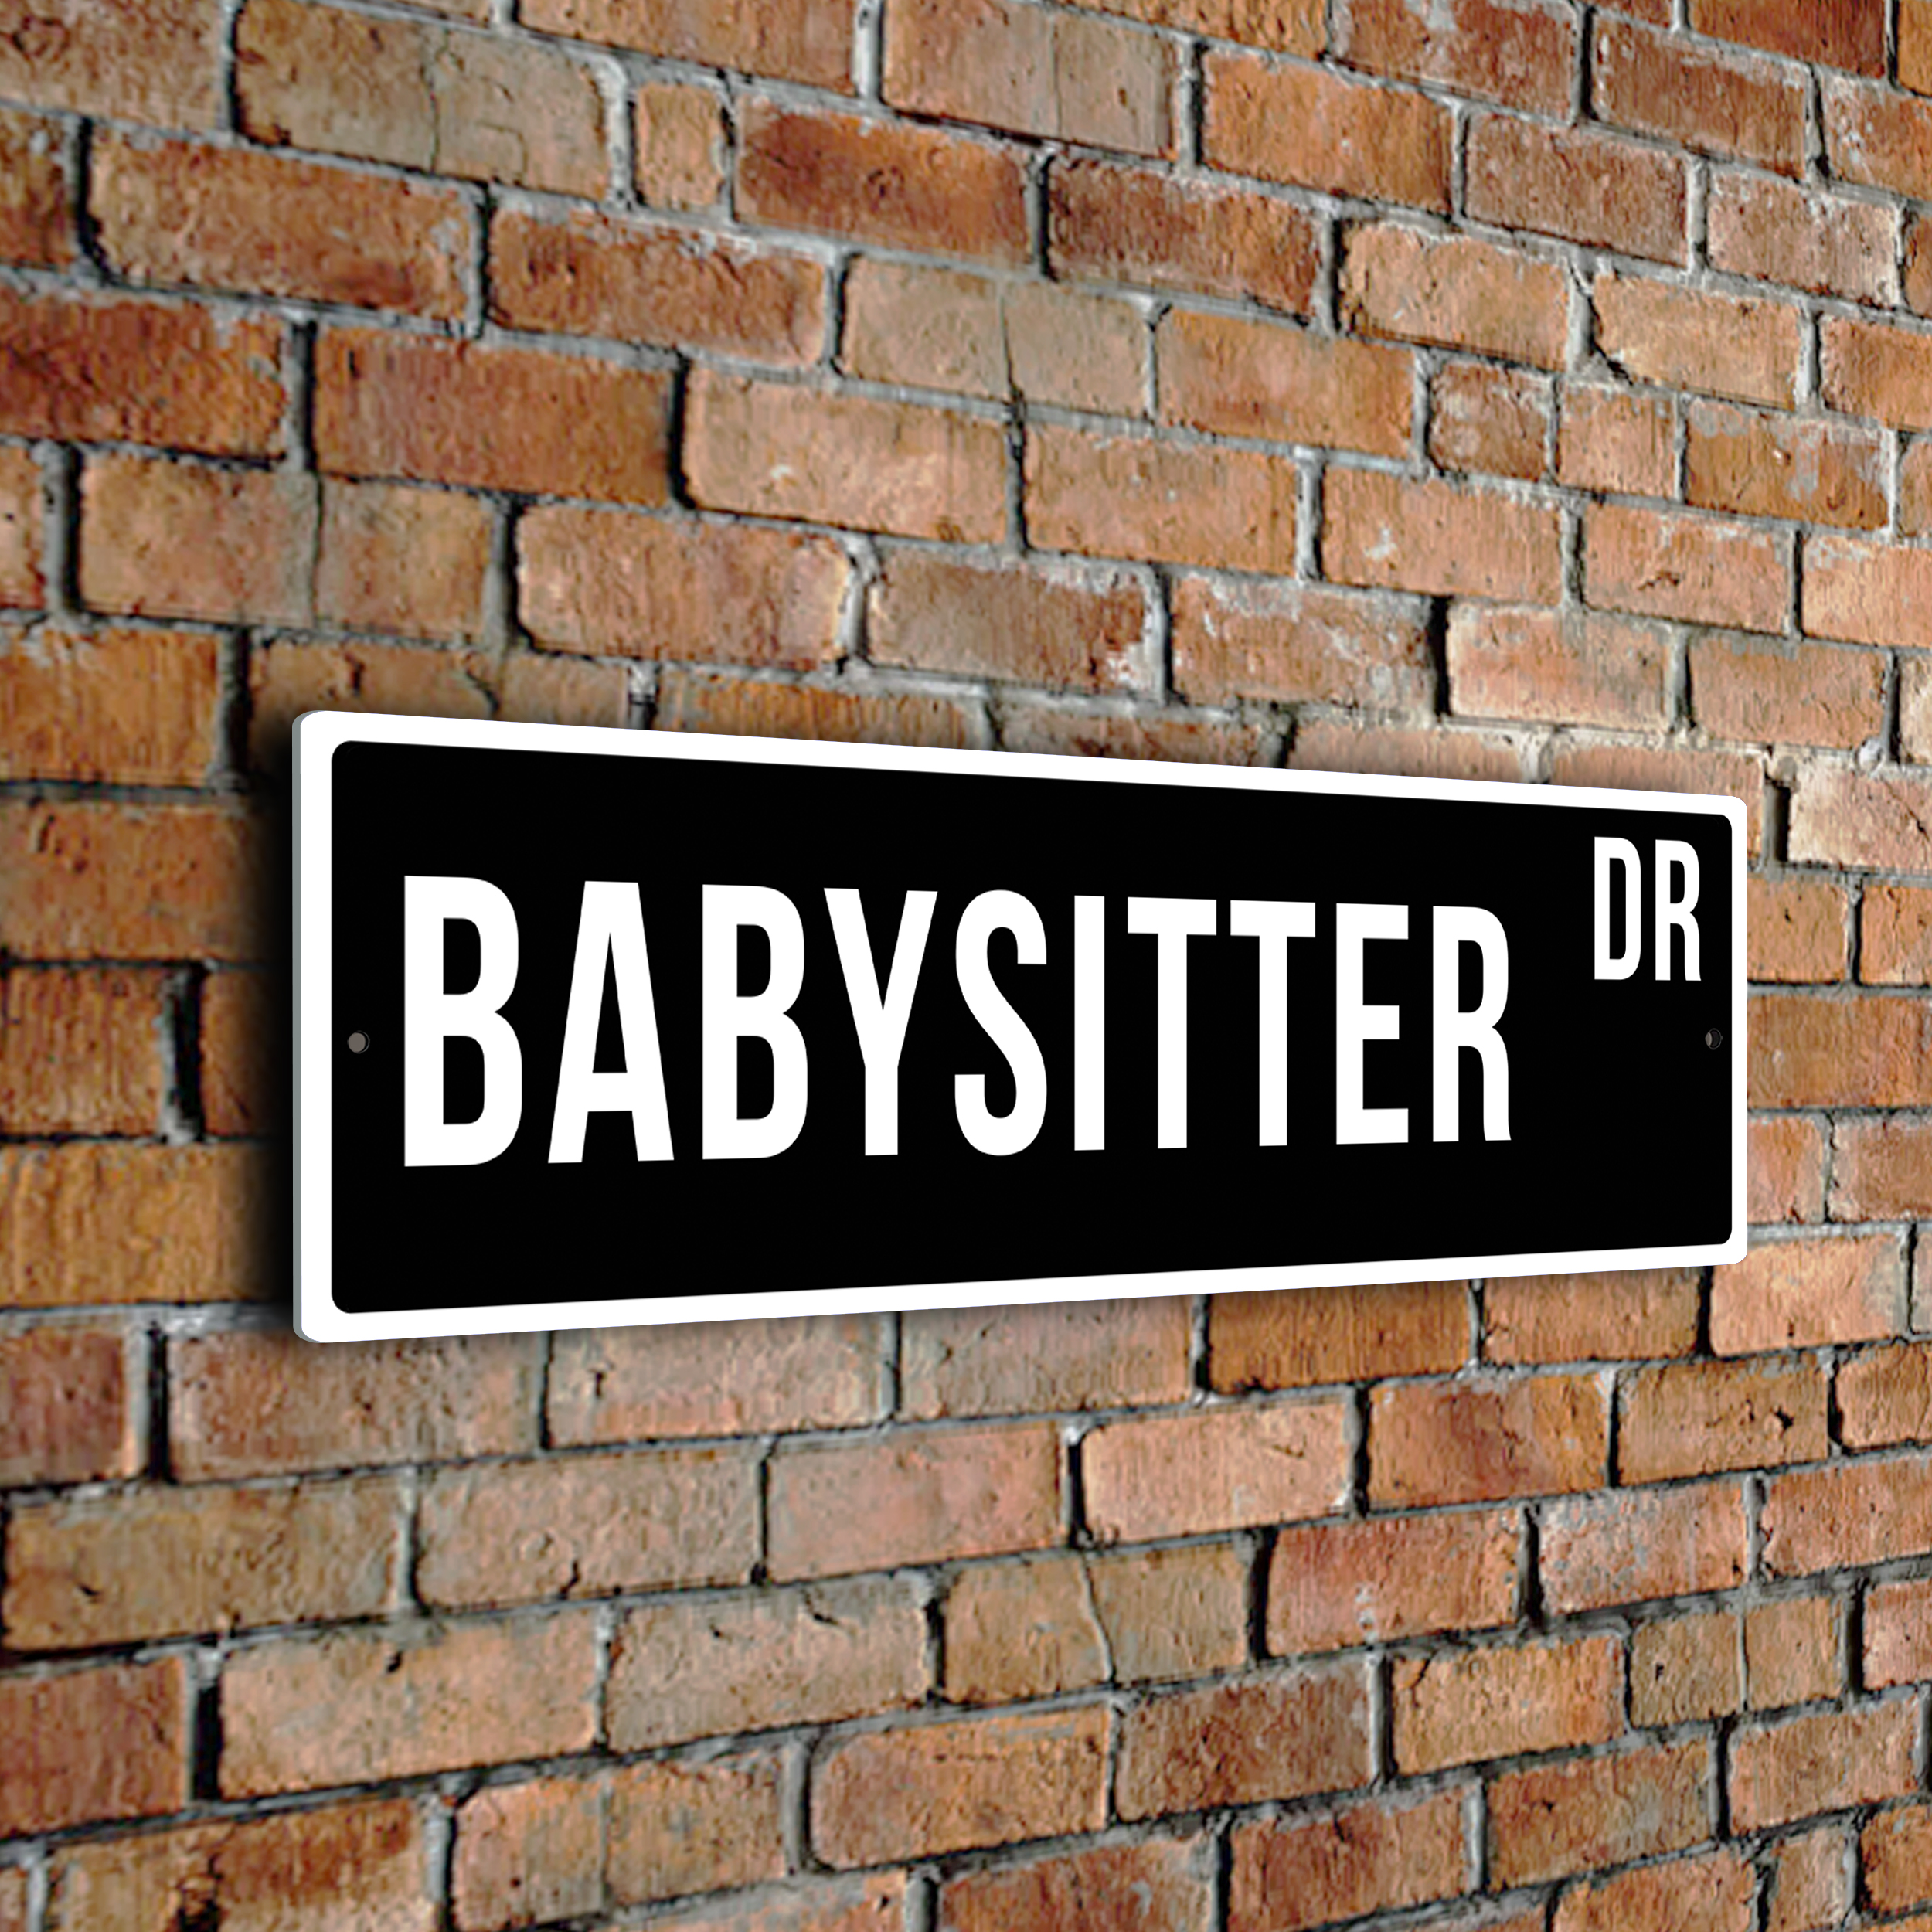 Babysitter street sign